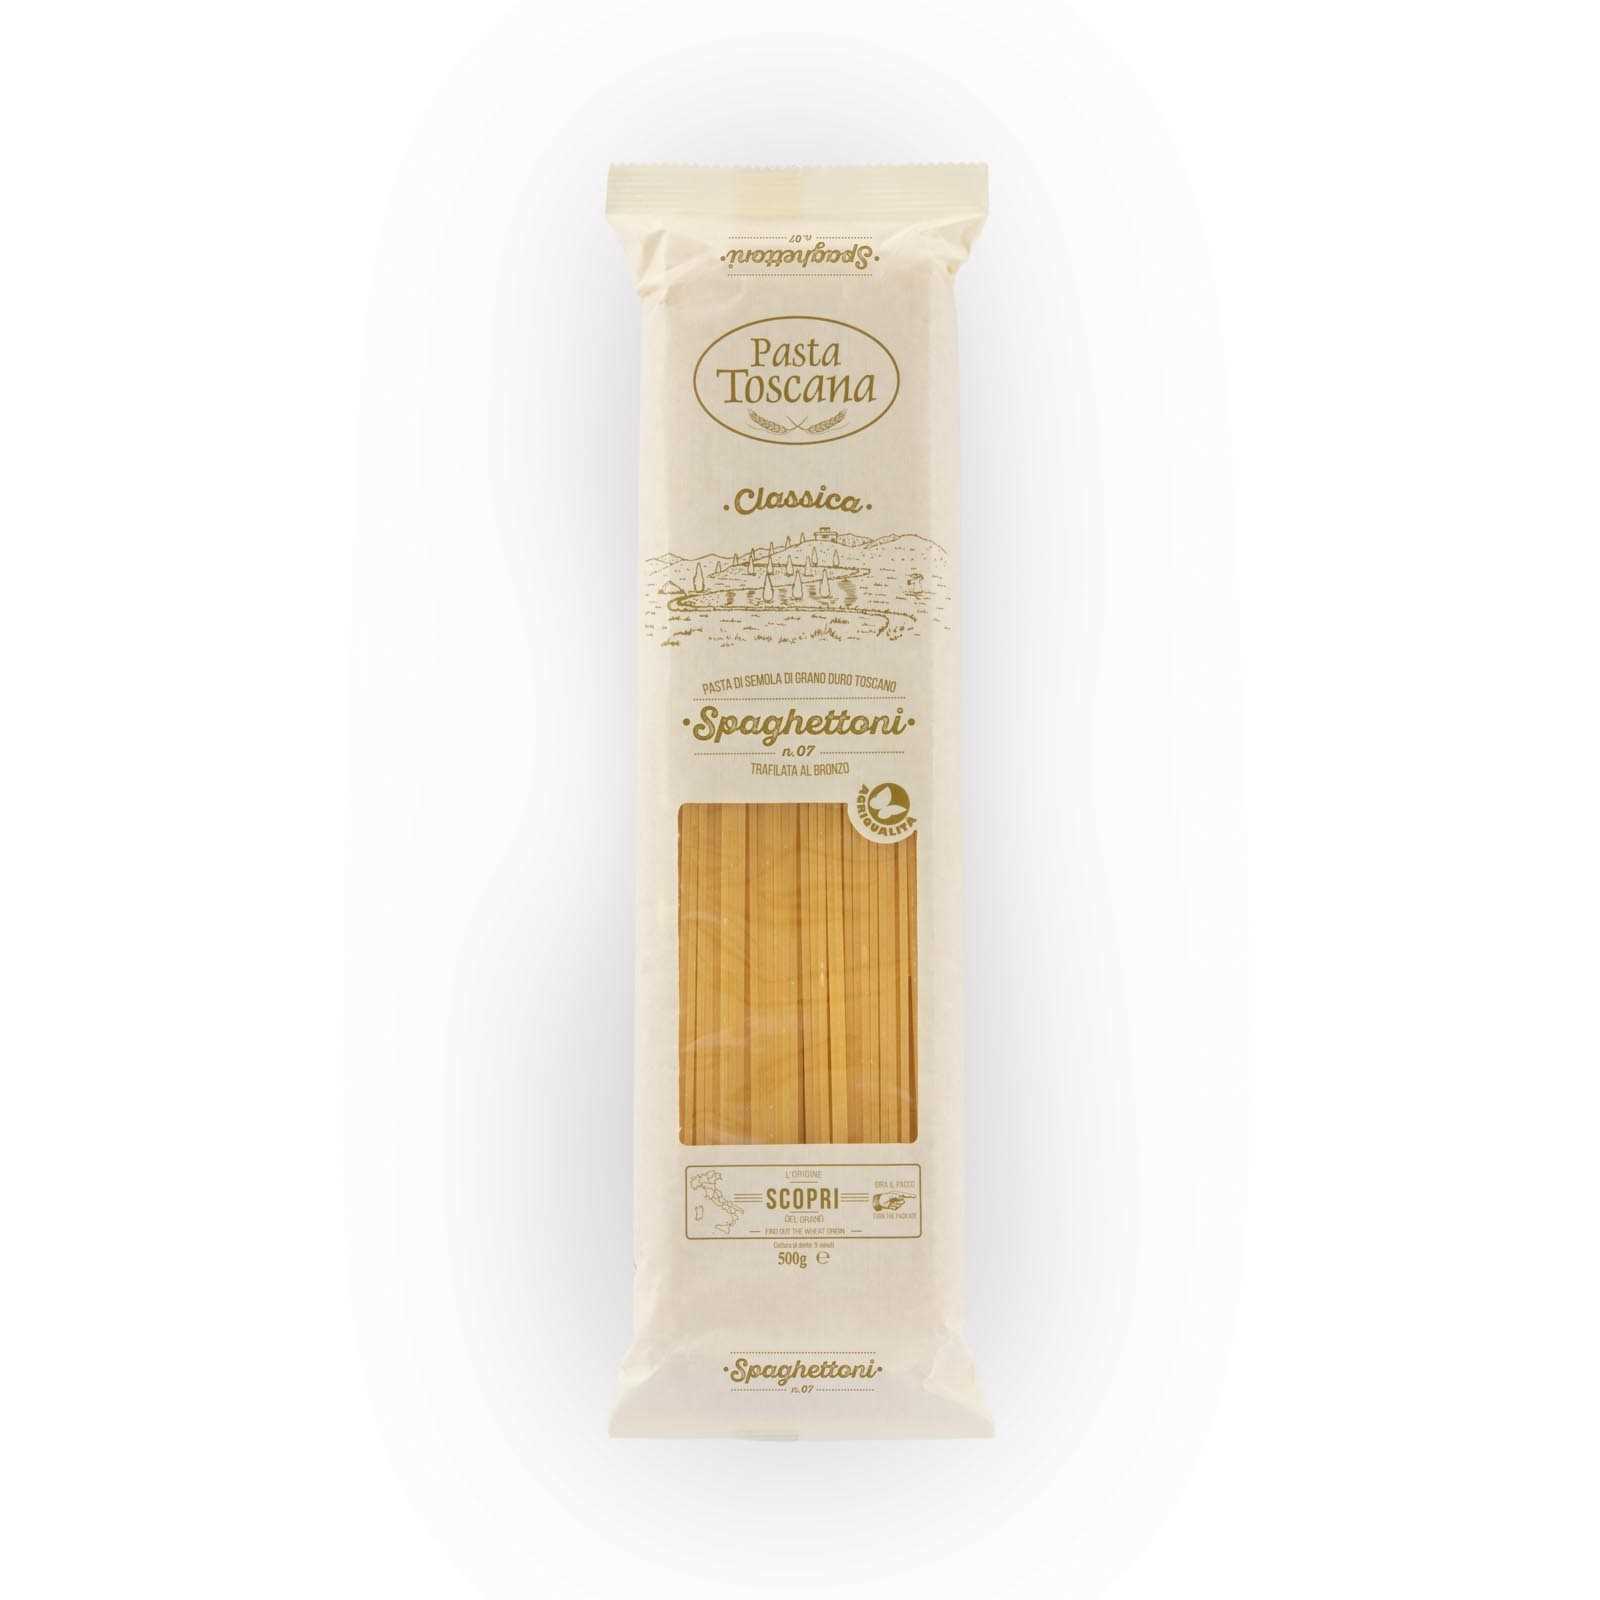 Durum wheat pasta “Spaghettoni”, bronze drawn and slow drying.